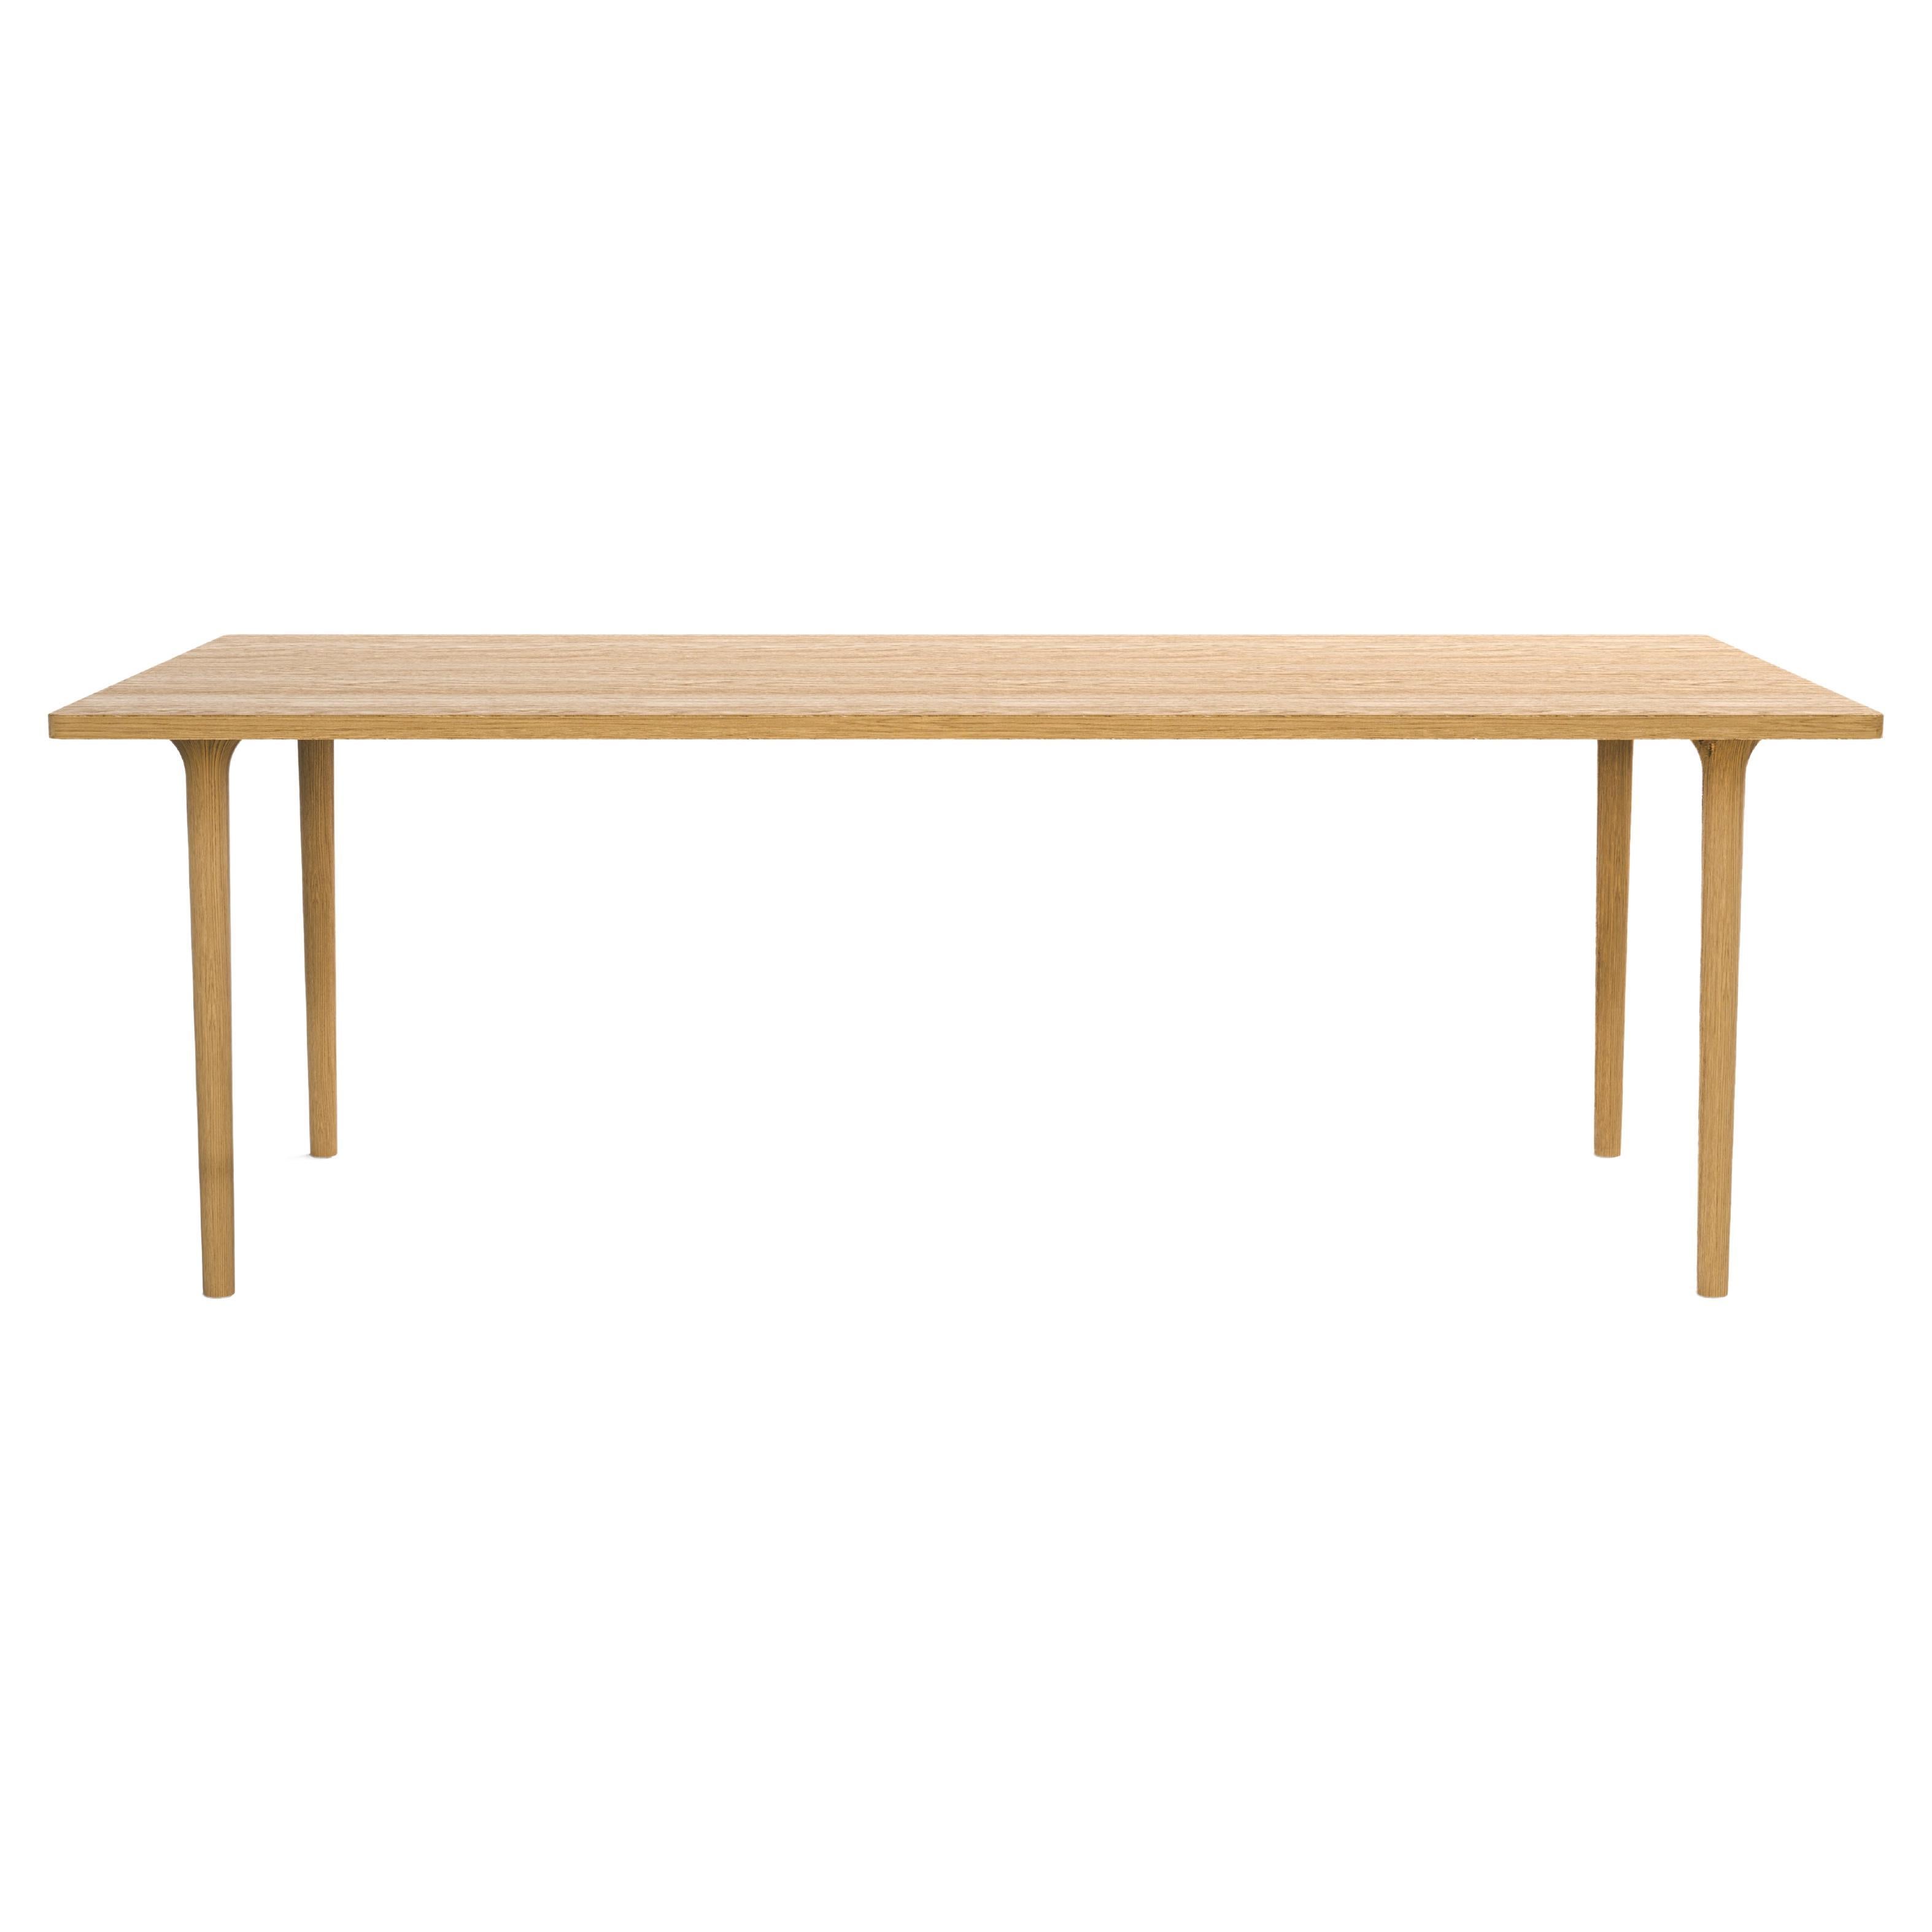 Minimalist Modern Table in Oak Wood Rectangular For Sale